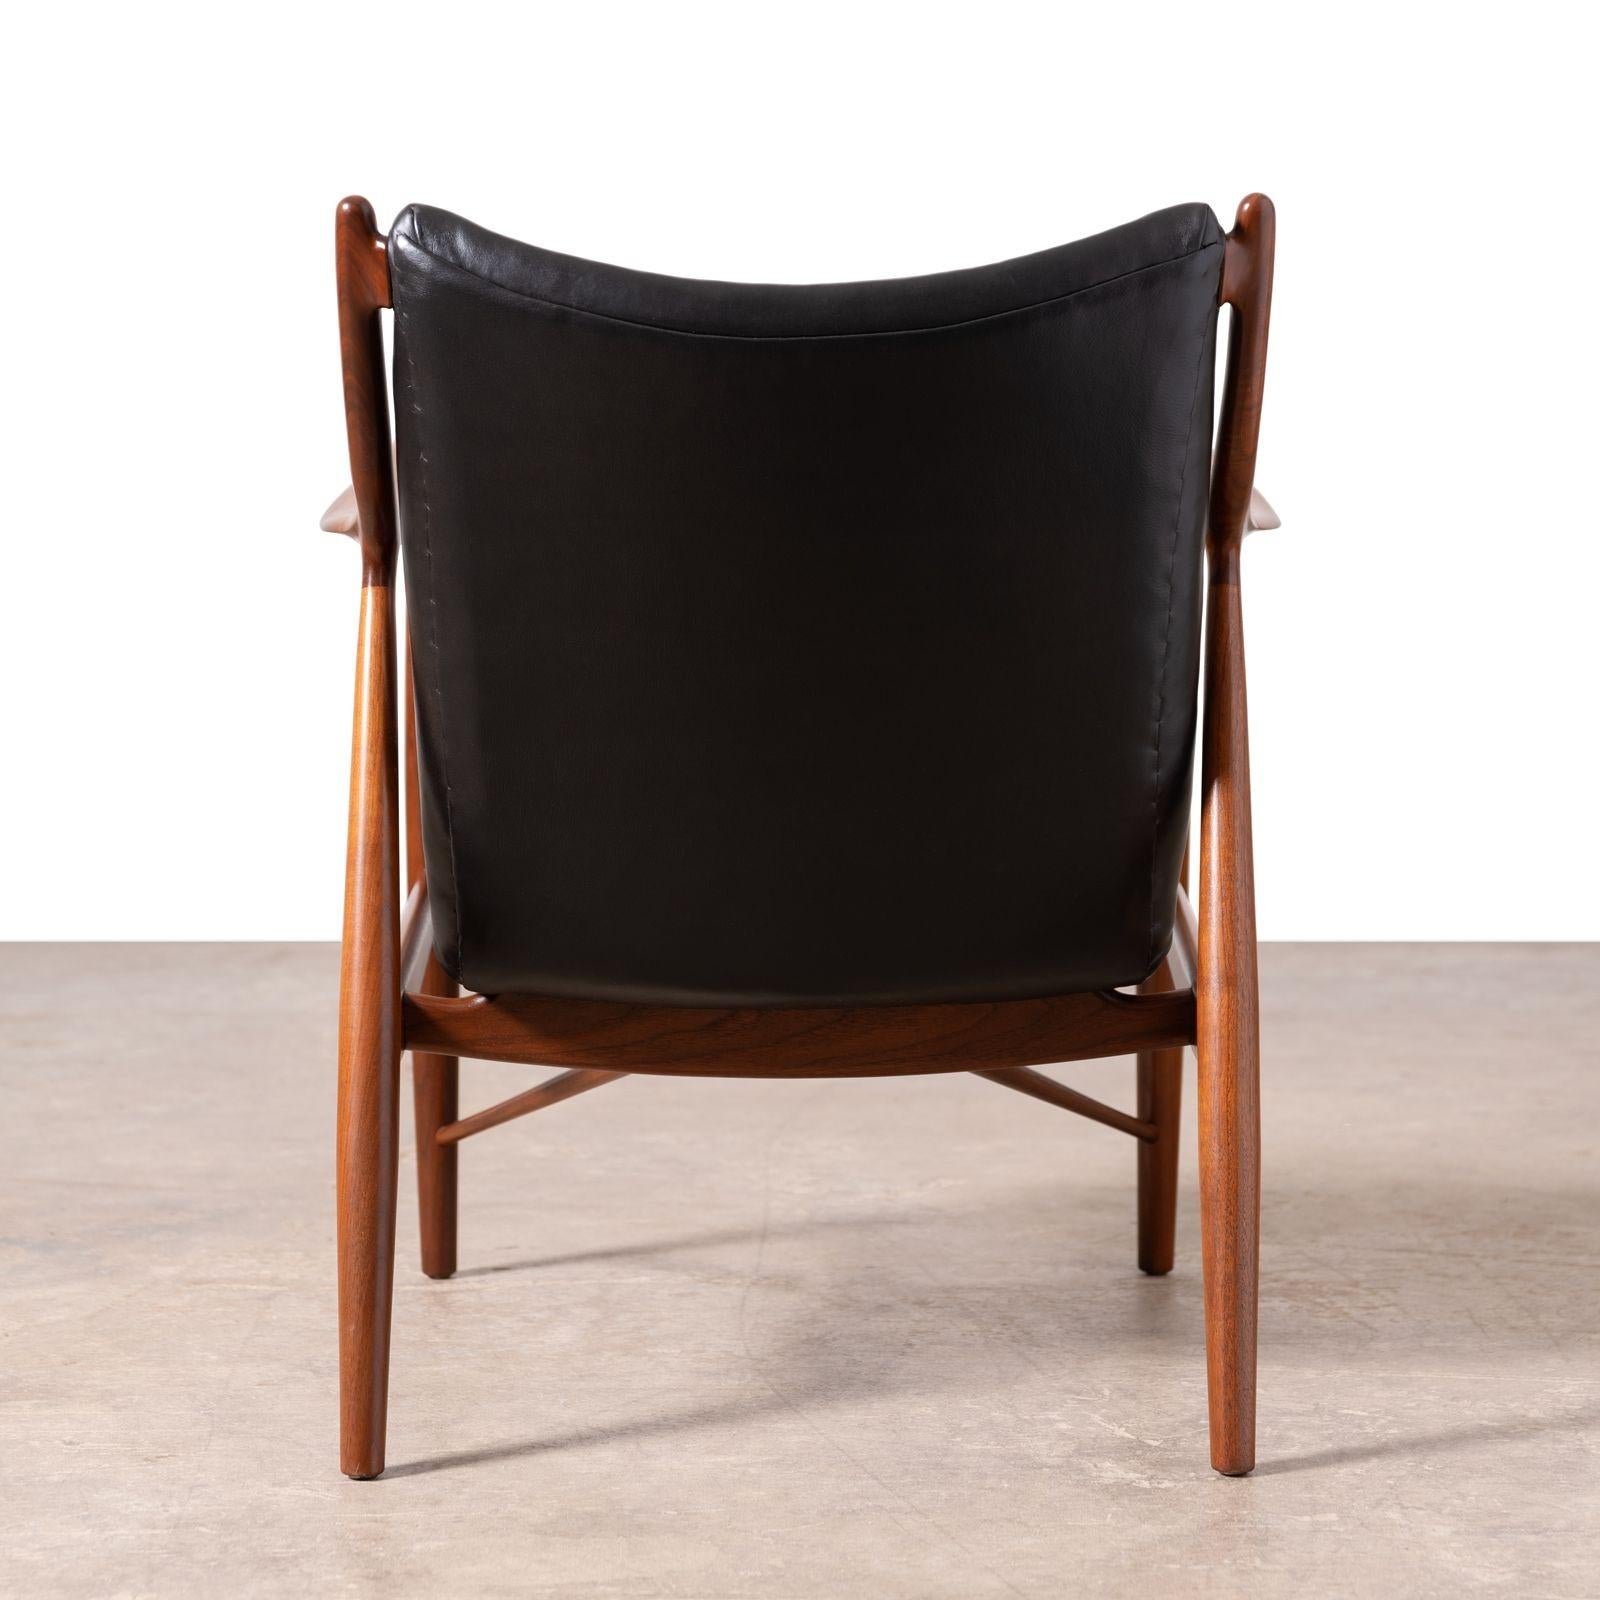 Finn Juhl NV-45 Scandinavian Lounge Chairs in Walnut and Black Leather 1950s For Sale 5